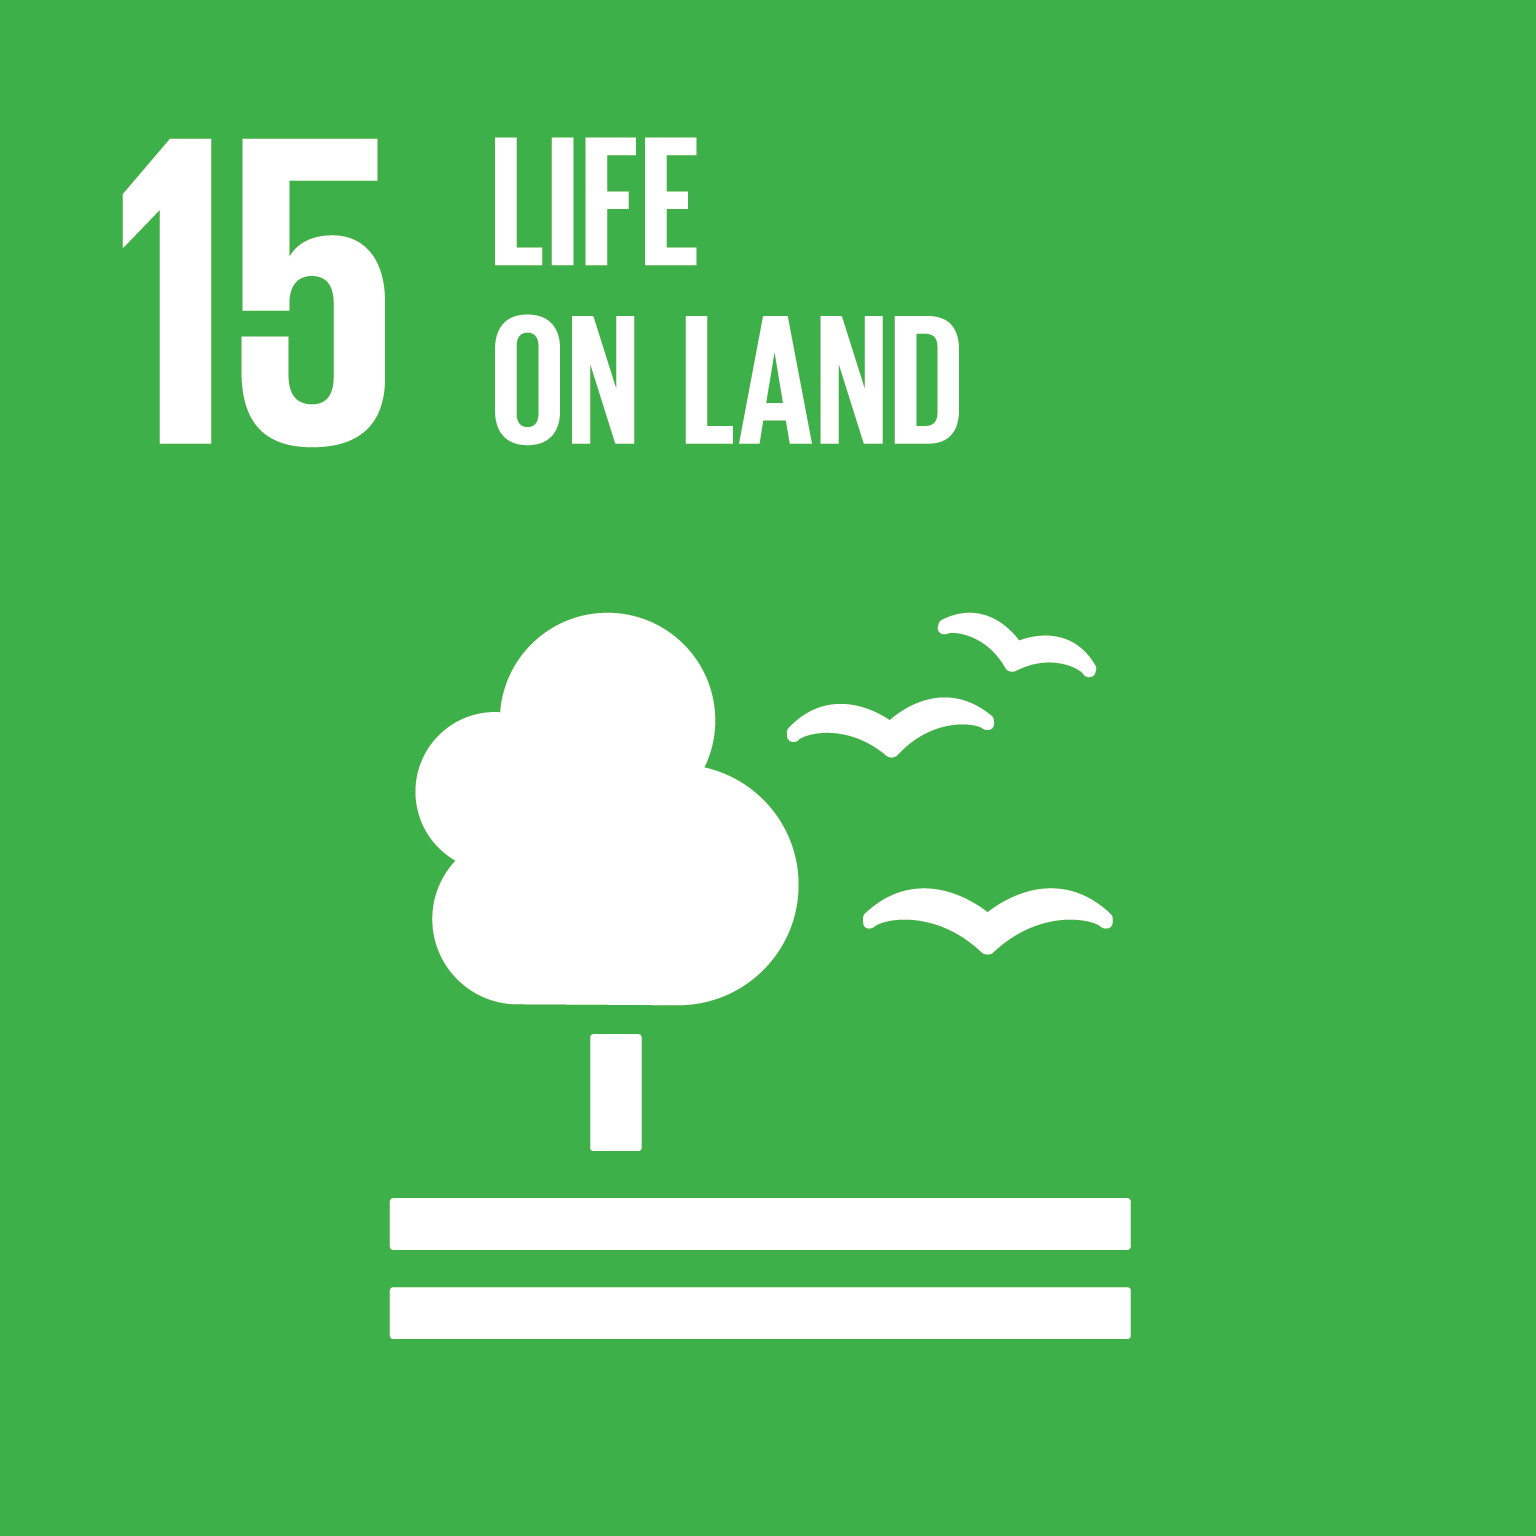 Goal 15: Life on Land - United Nations Sustainable Development